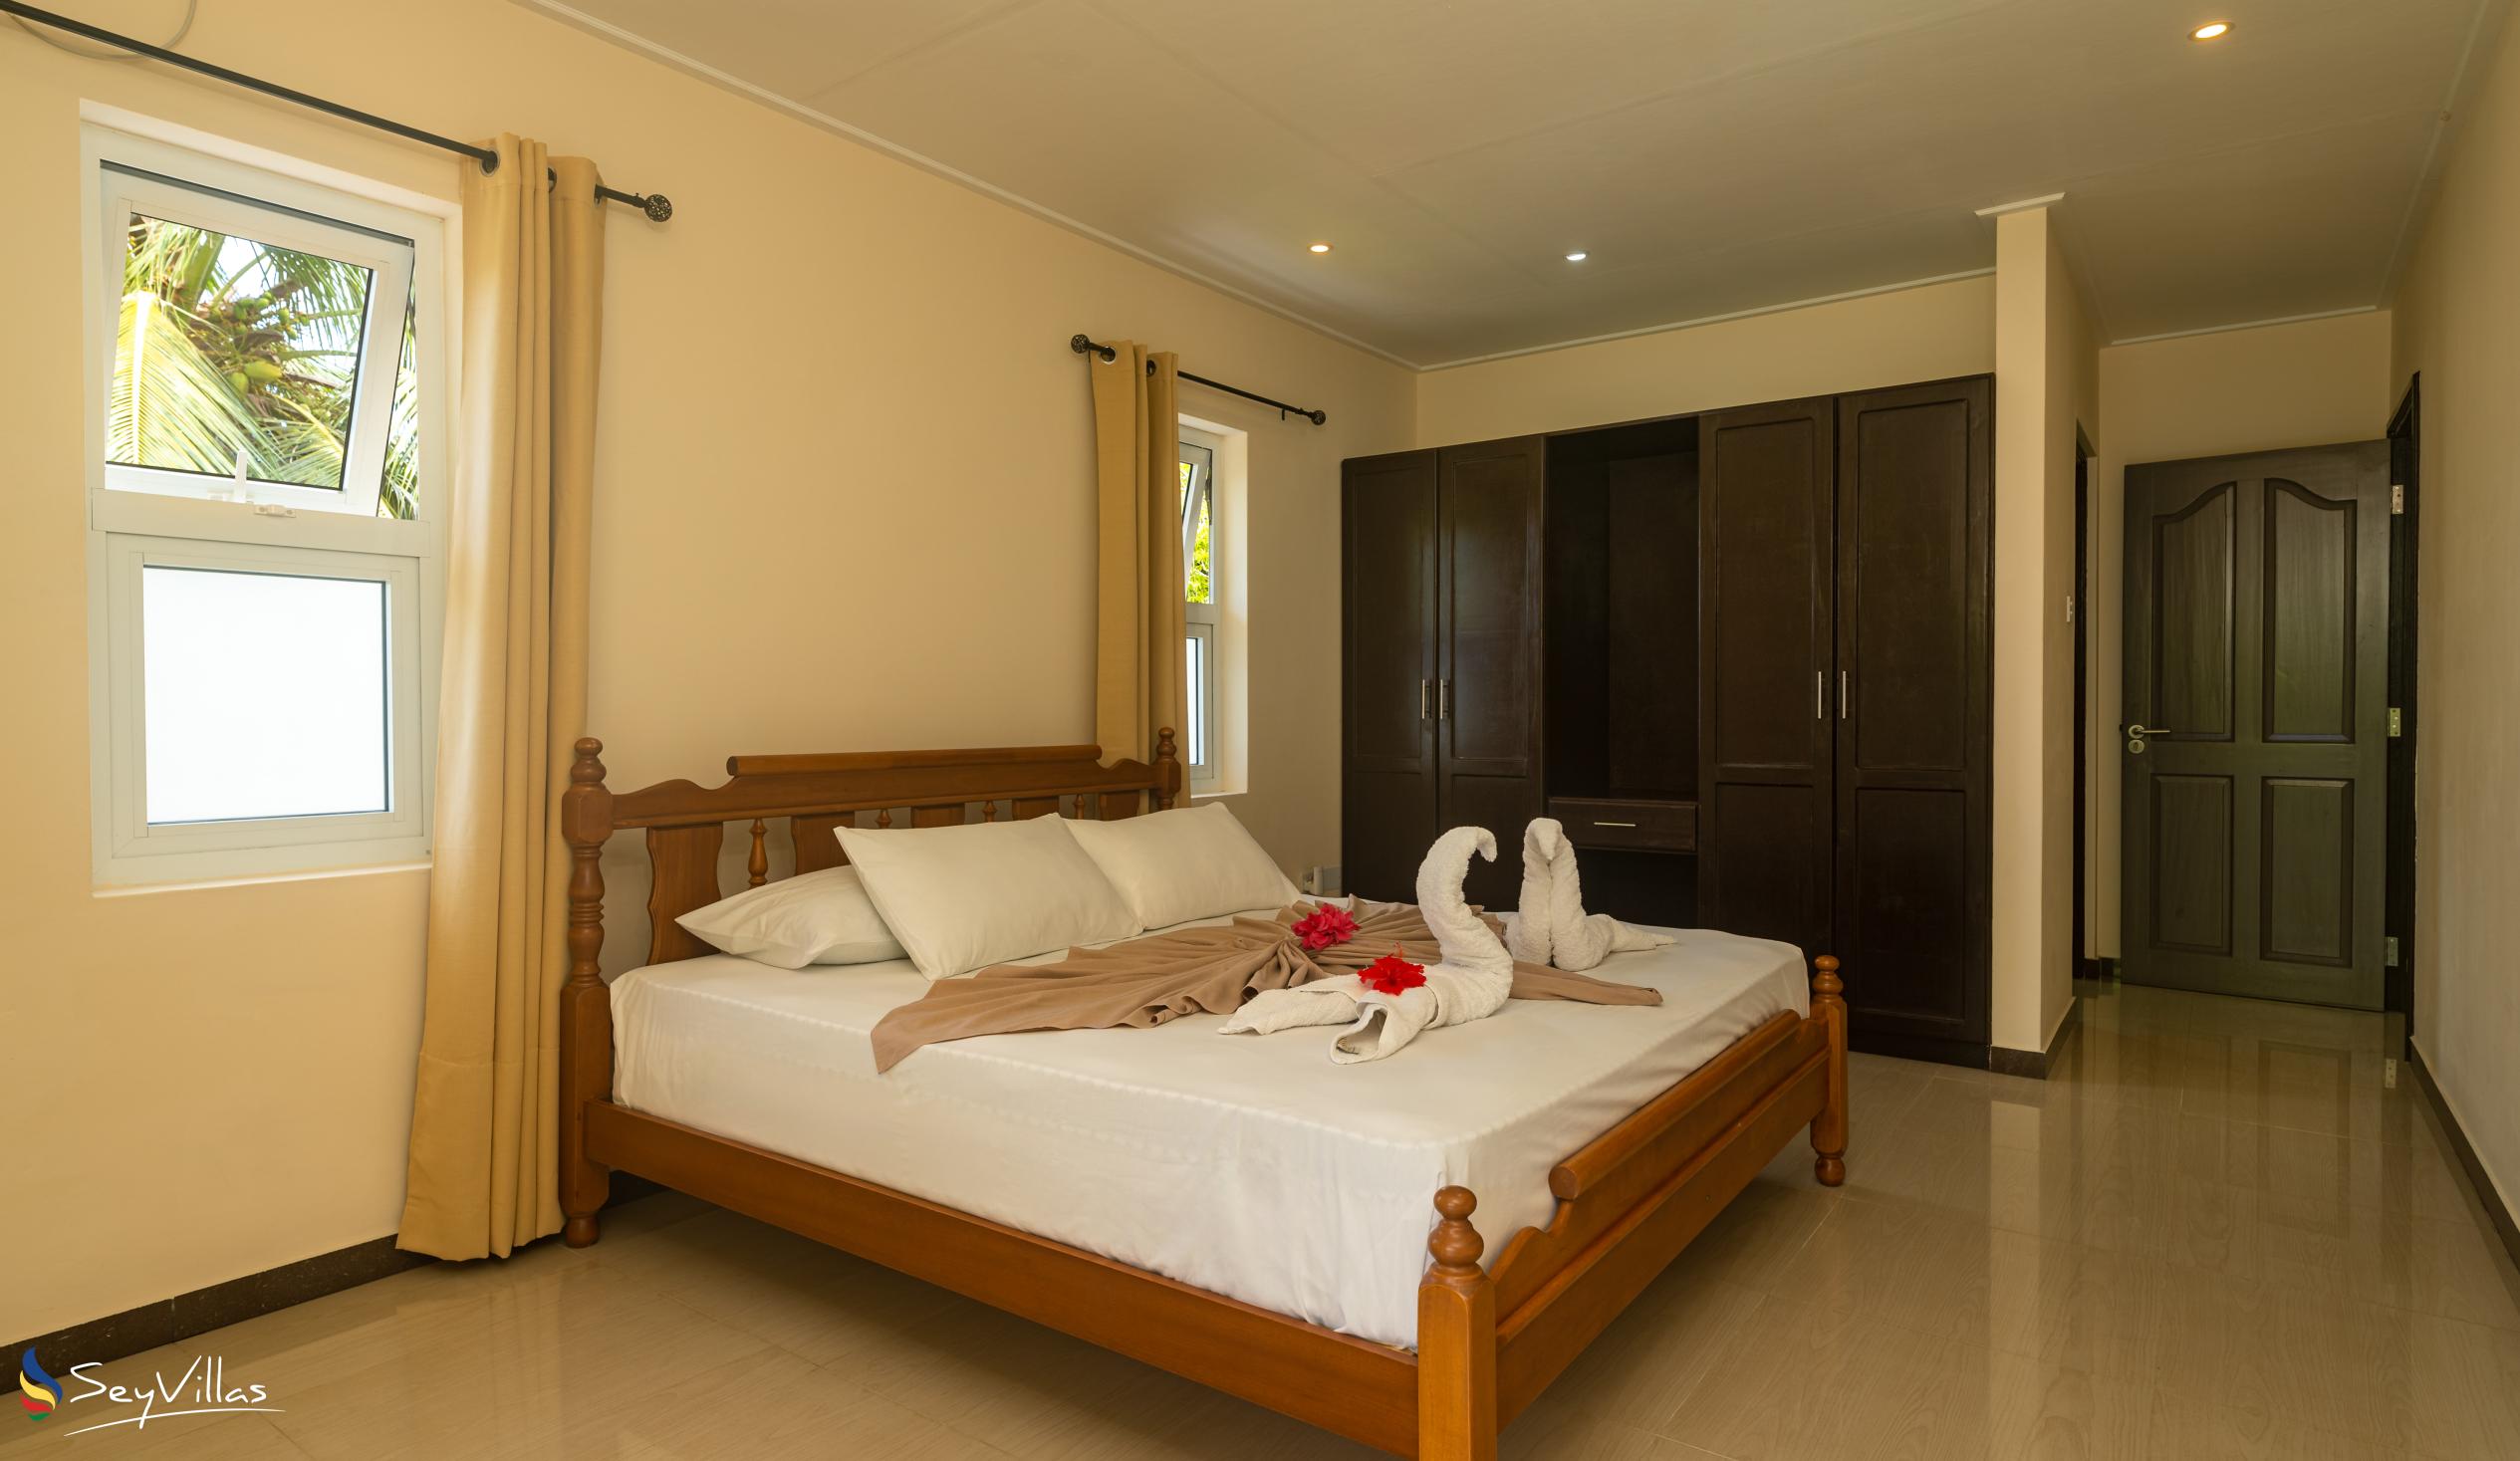 Foto 60: JAIDSS Holiday Apartments - Appartamento con 2 camere - Mahé (Seychelles)